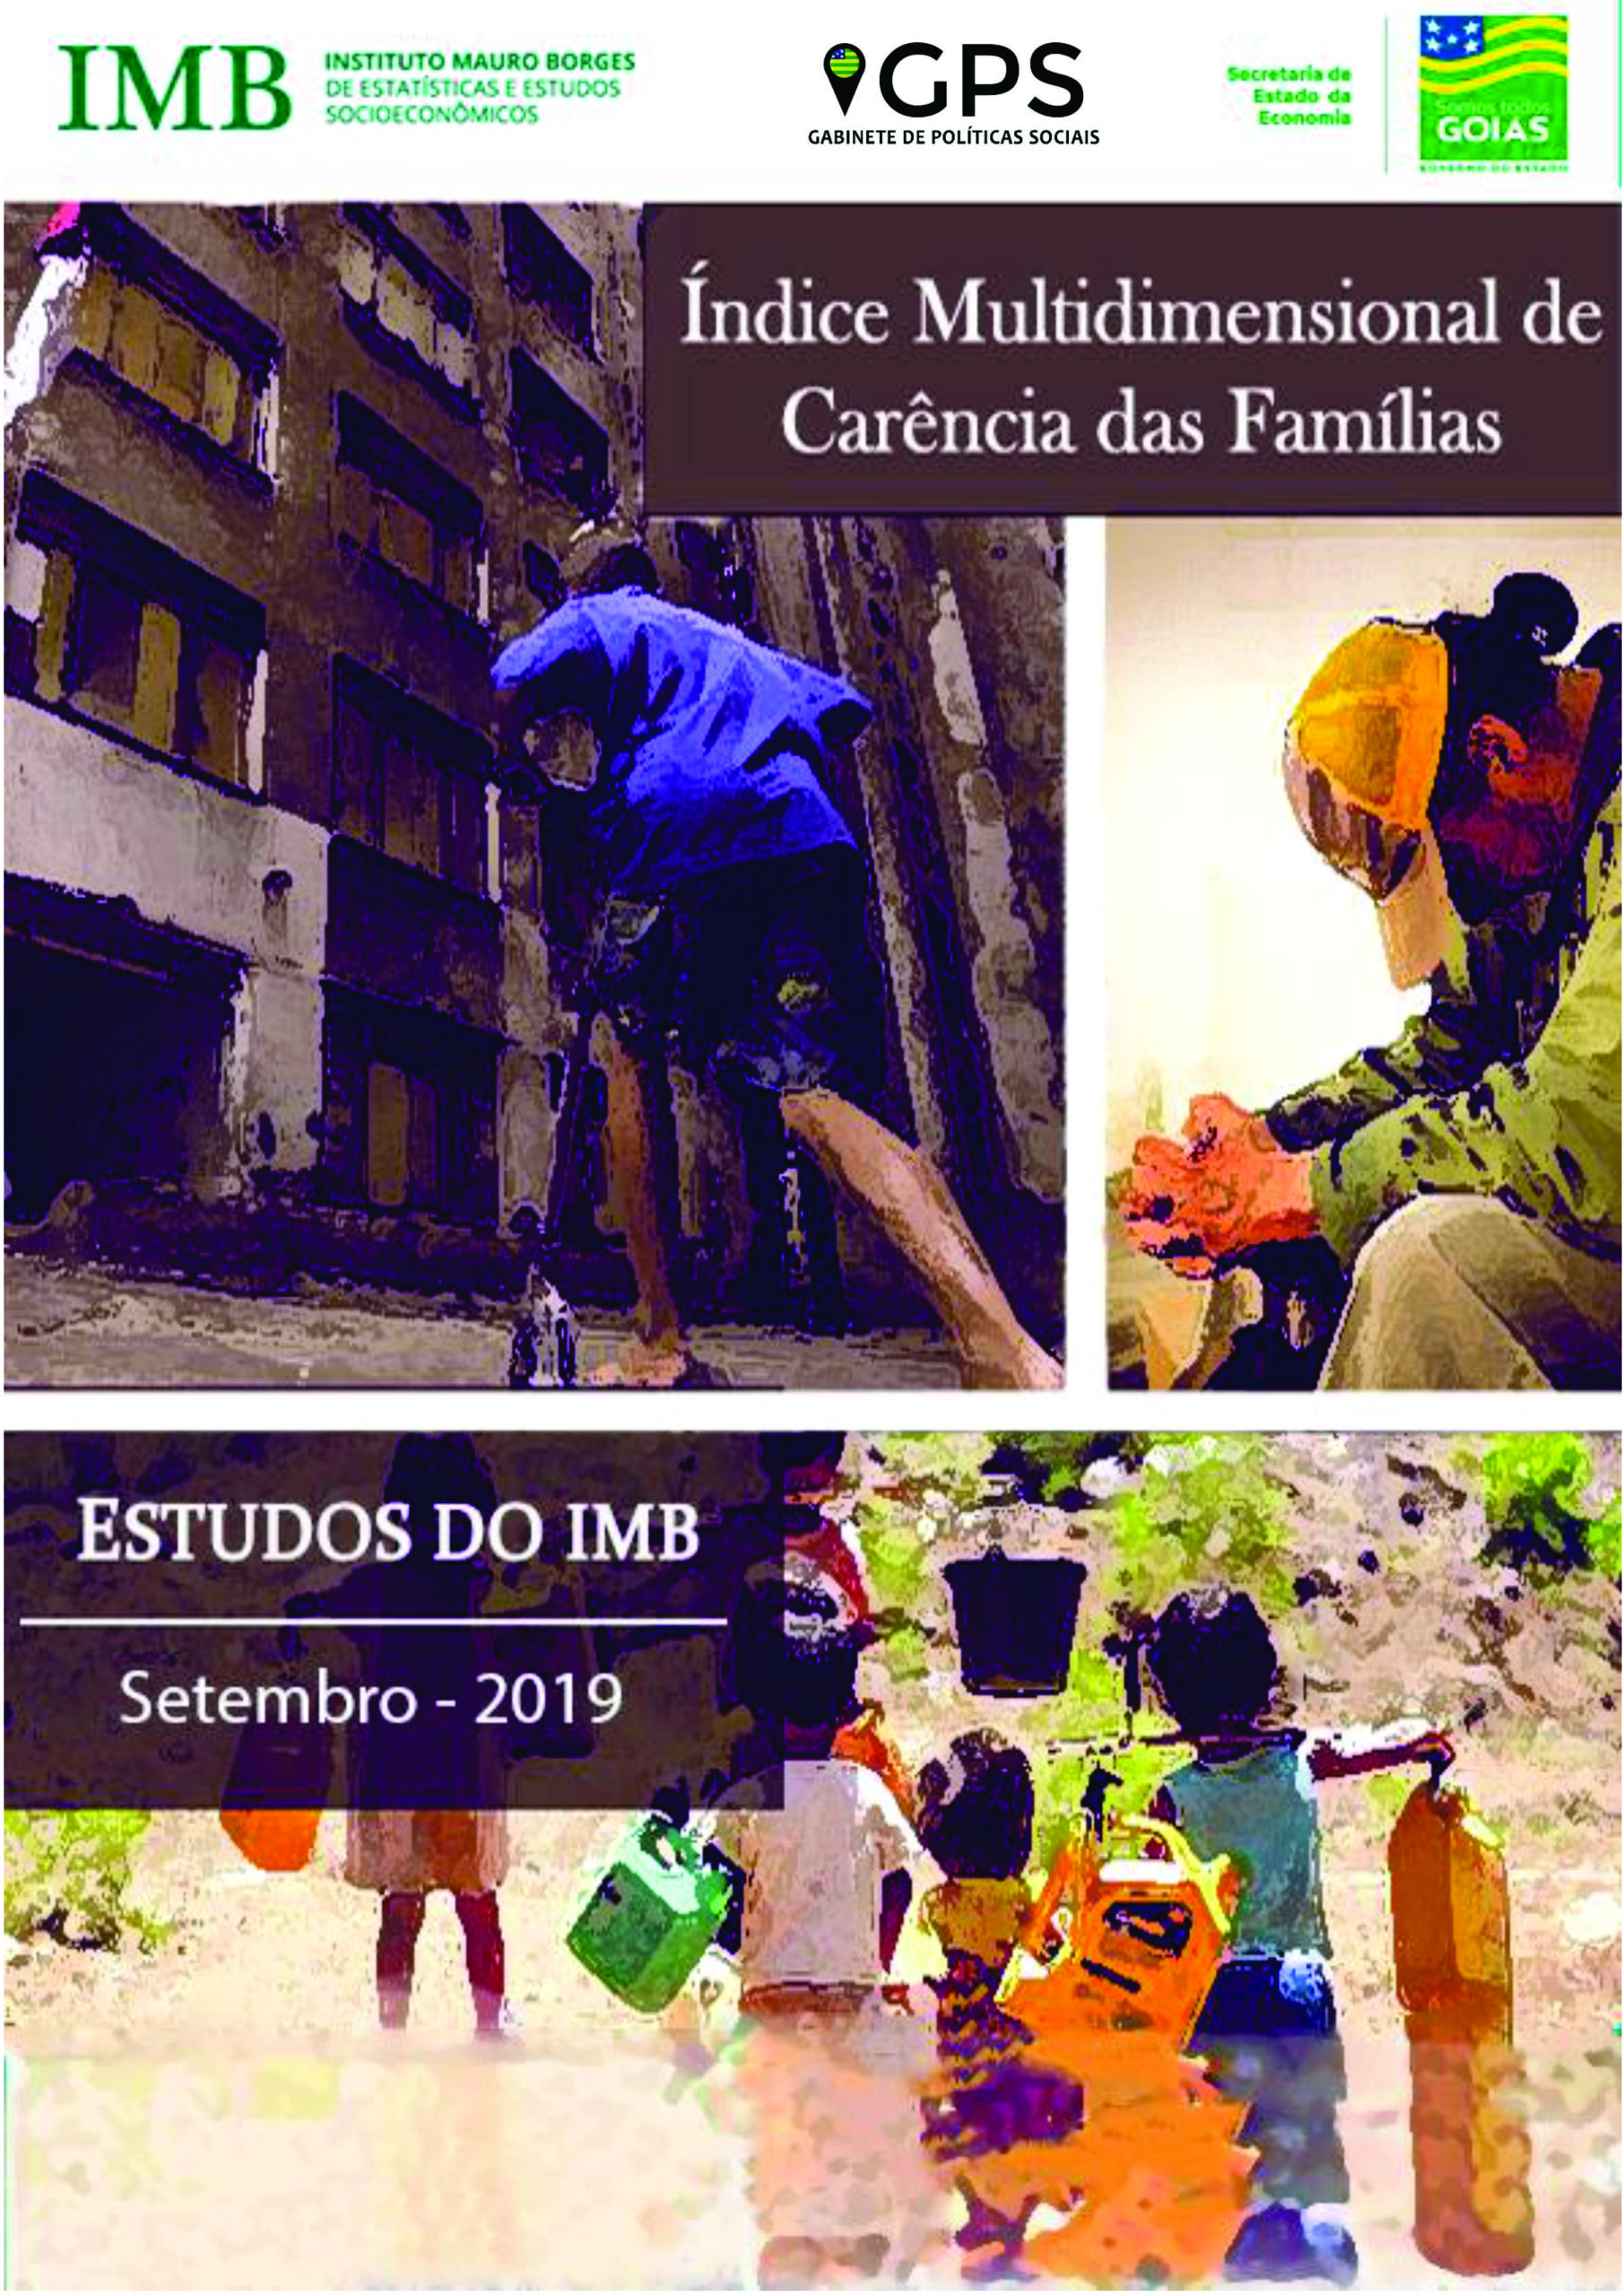 Índice Multidimensional da Carência das Famílias (IMCF)